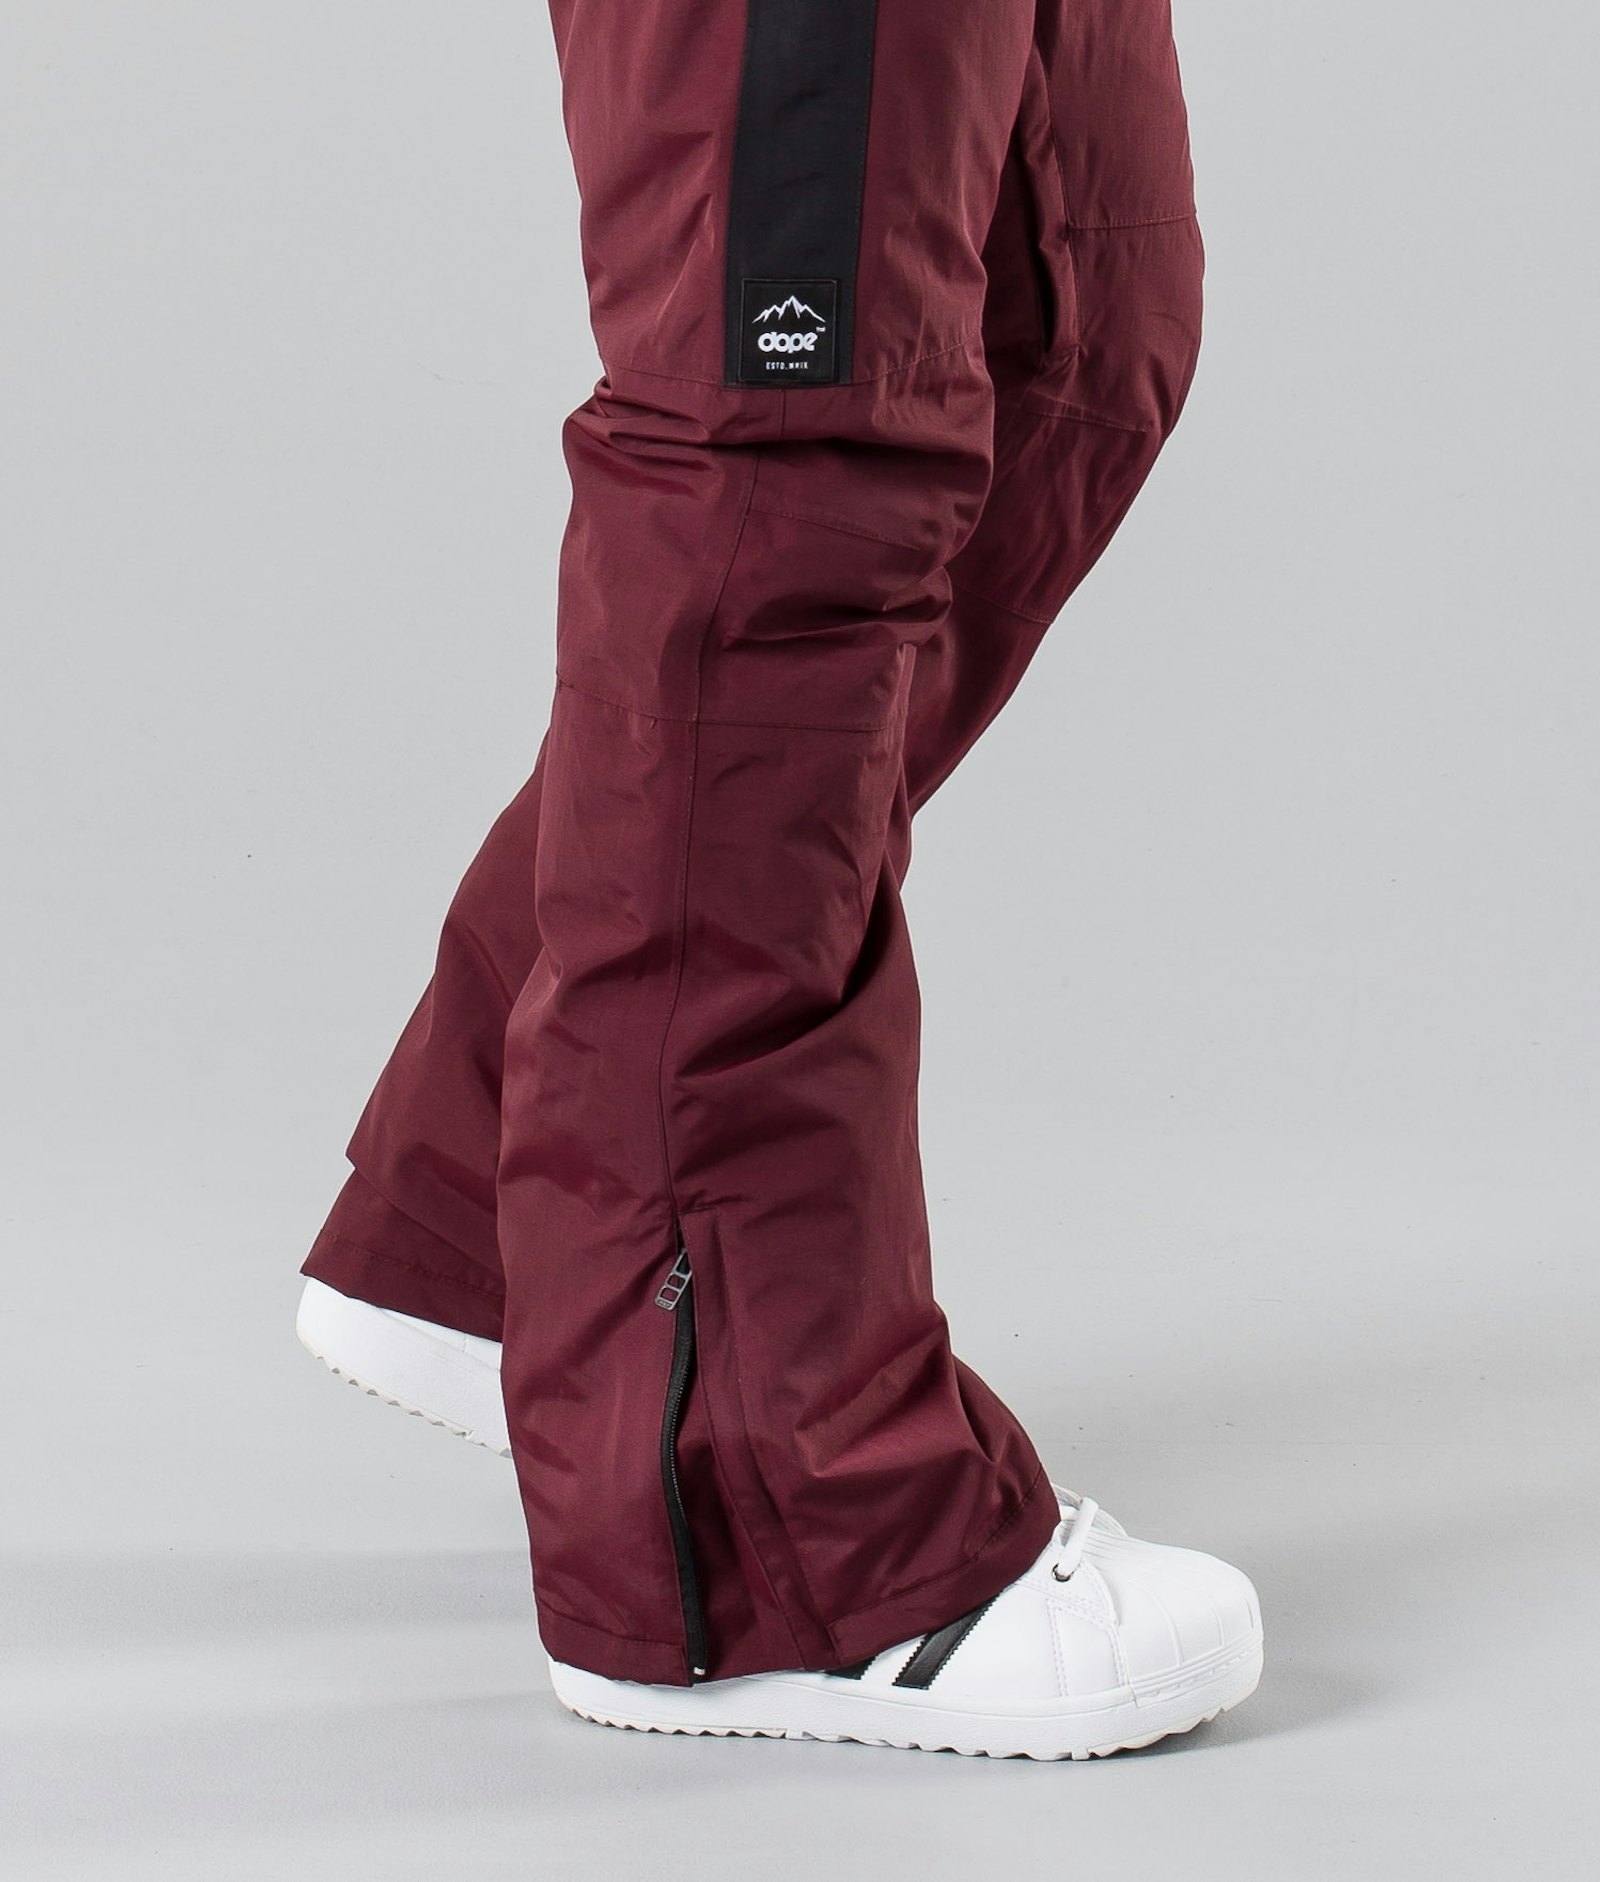 Dope Hoax II 2018 Pantalon de Snowboard Homme Burgundy